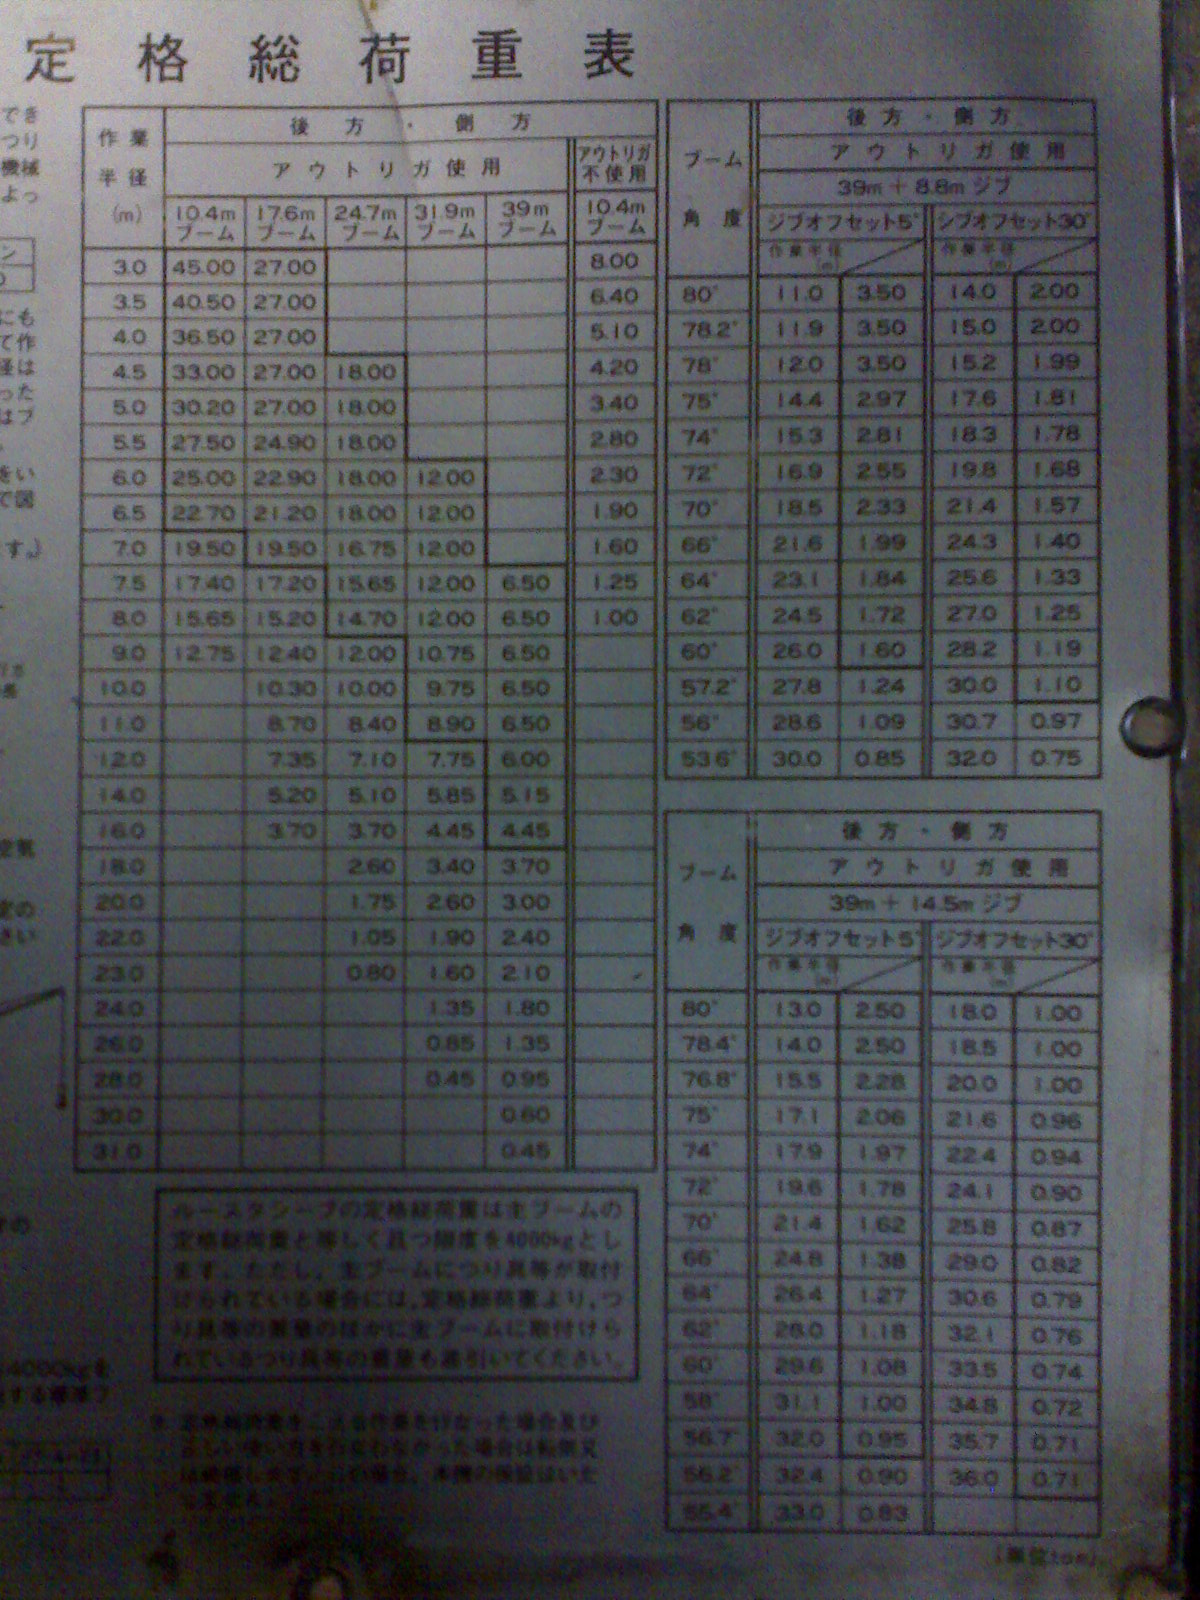 Kato Crane 35 Ton Load Chart